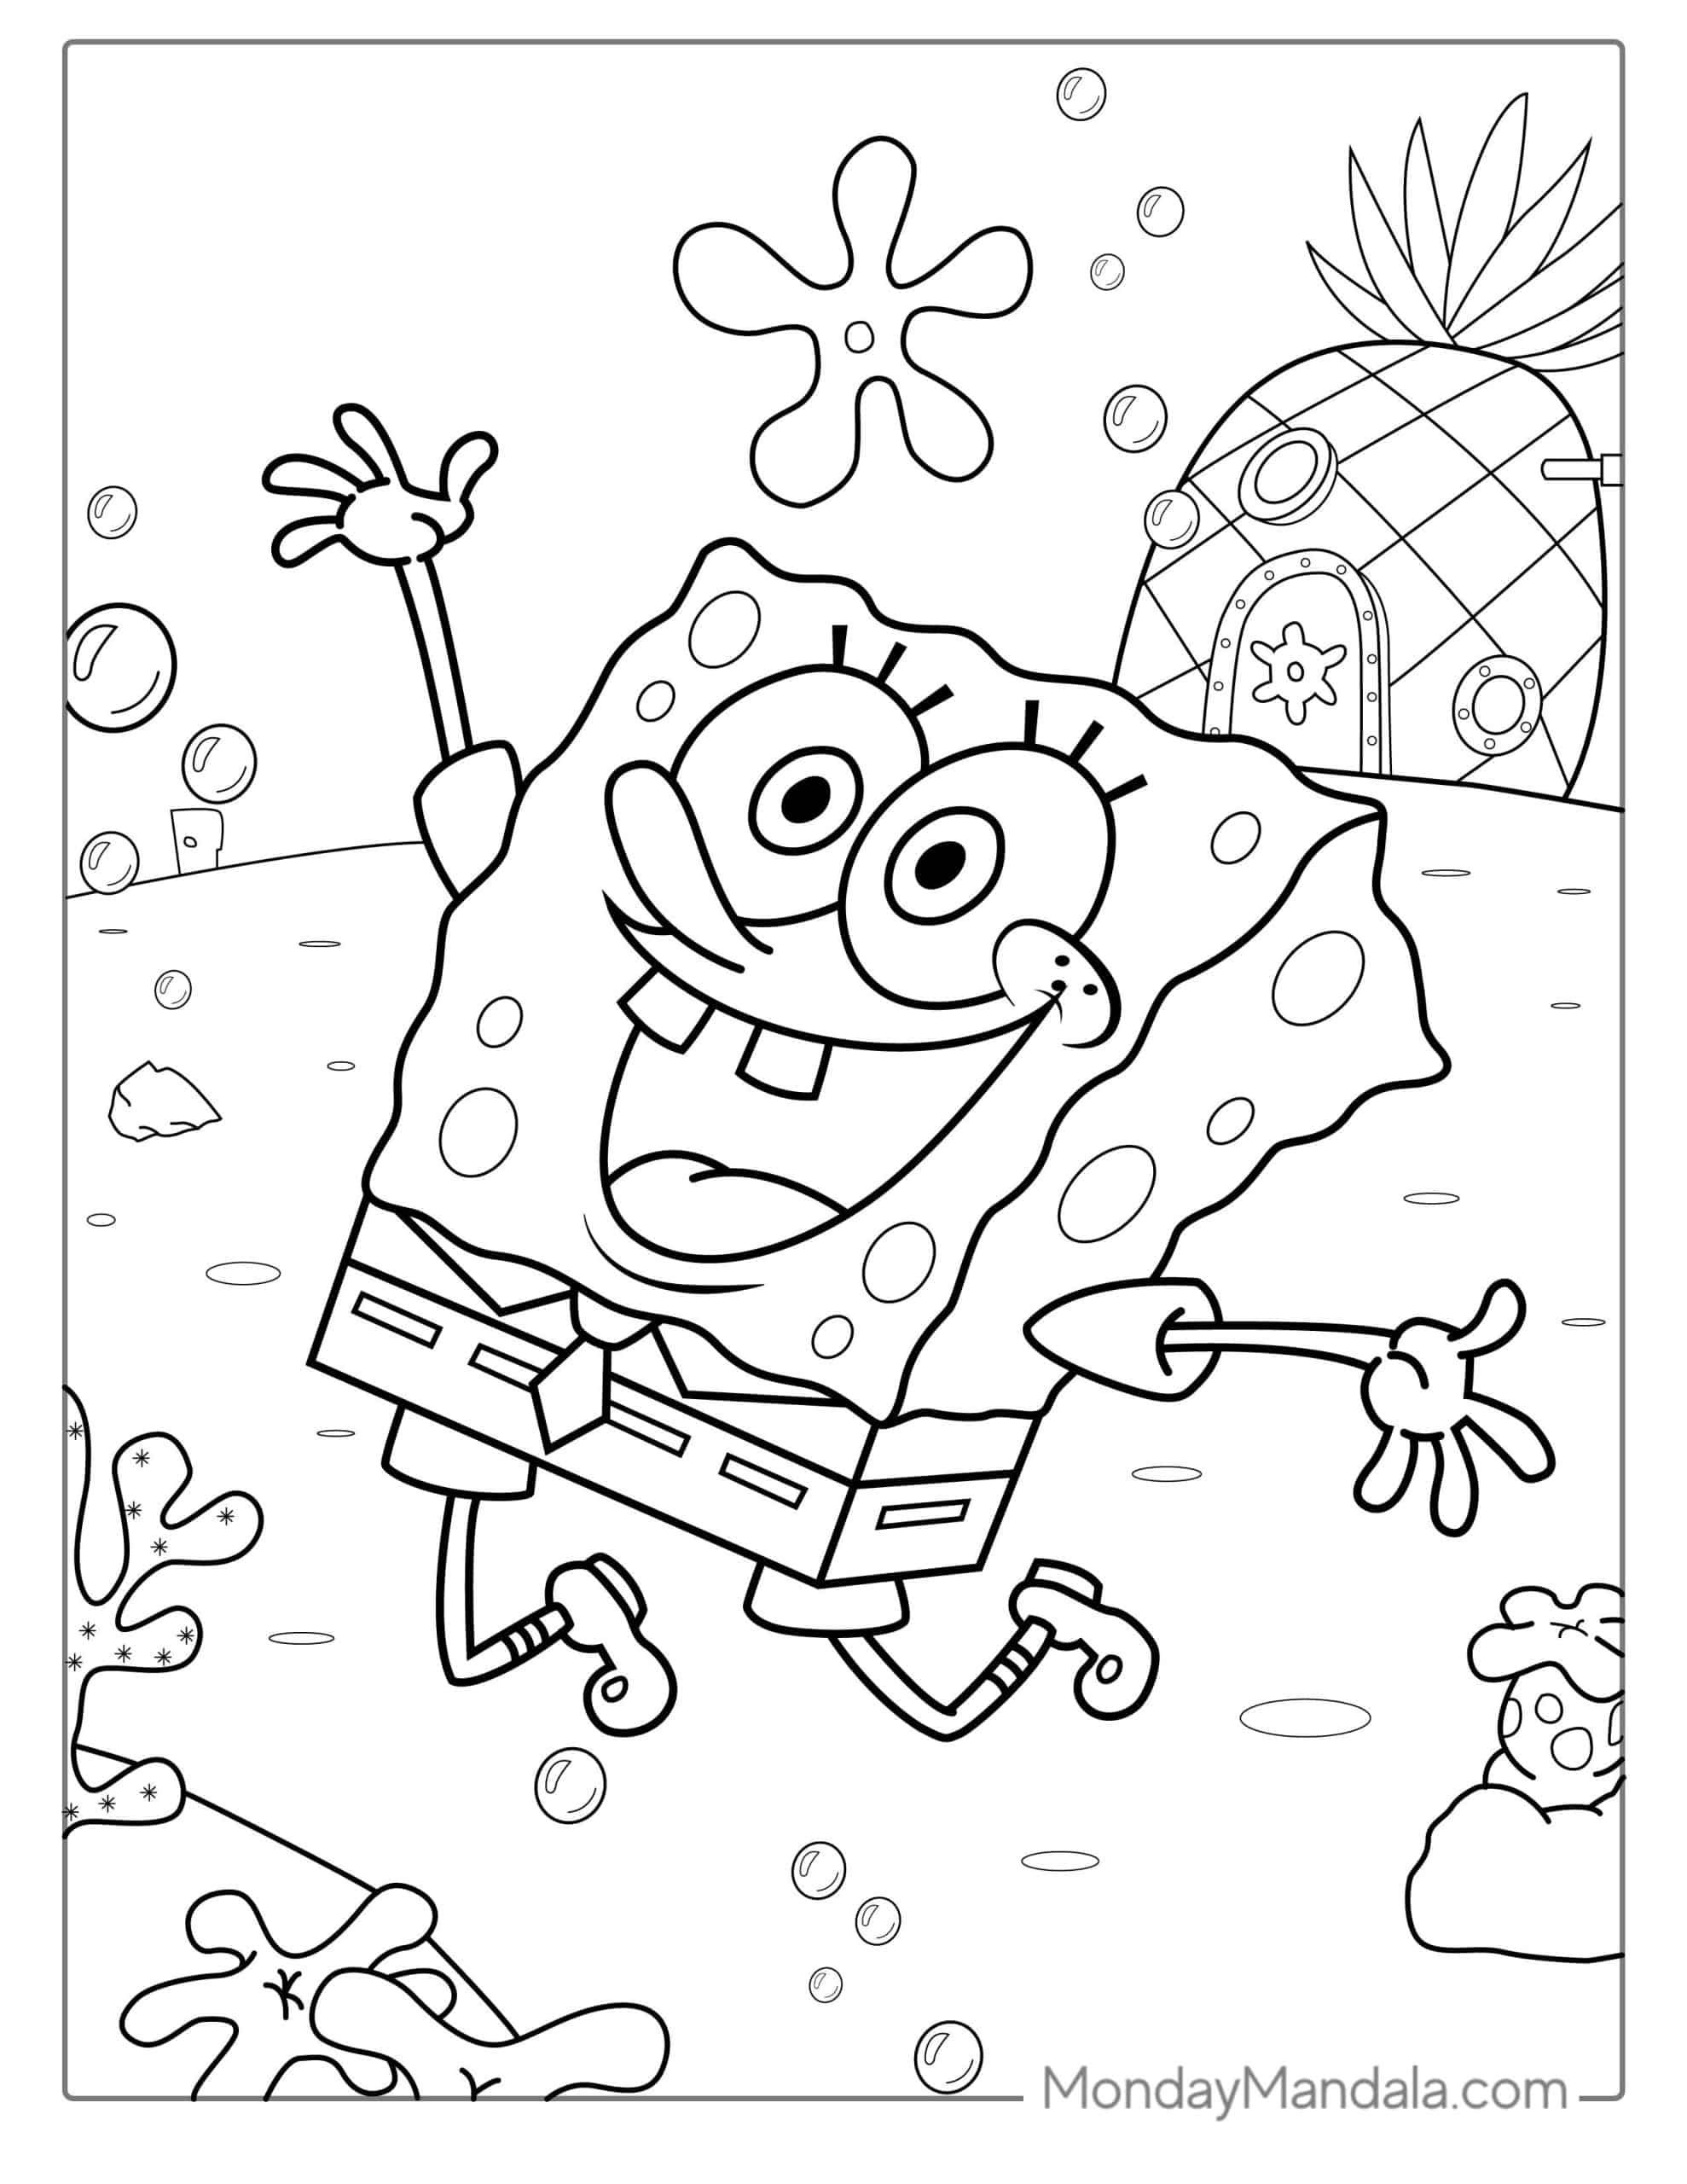 Spongebob coloring pages free pdf printables spongebob coloring coloring pages cartoon coloring pages